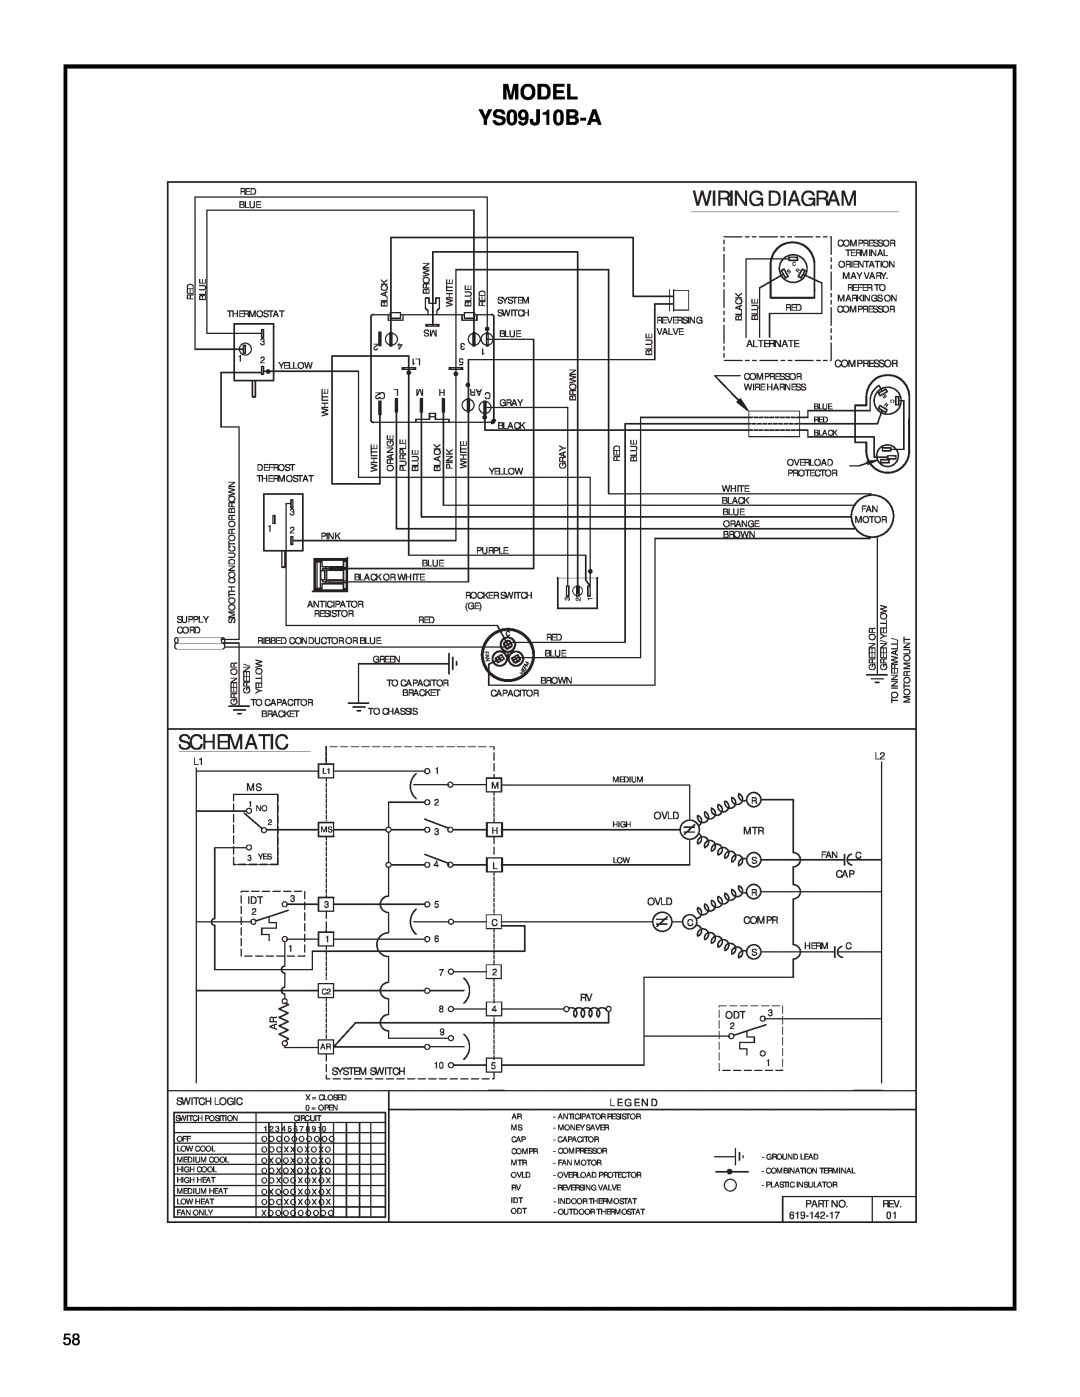 Friedrich 2003 service manual Model, YS09J10B-A, Wiring Diagram, Schematic 